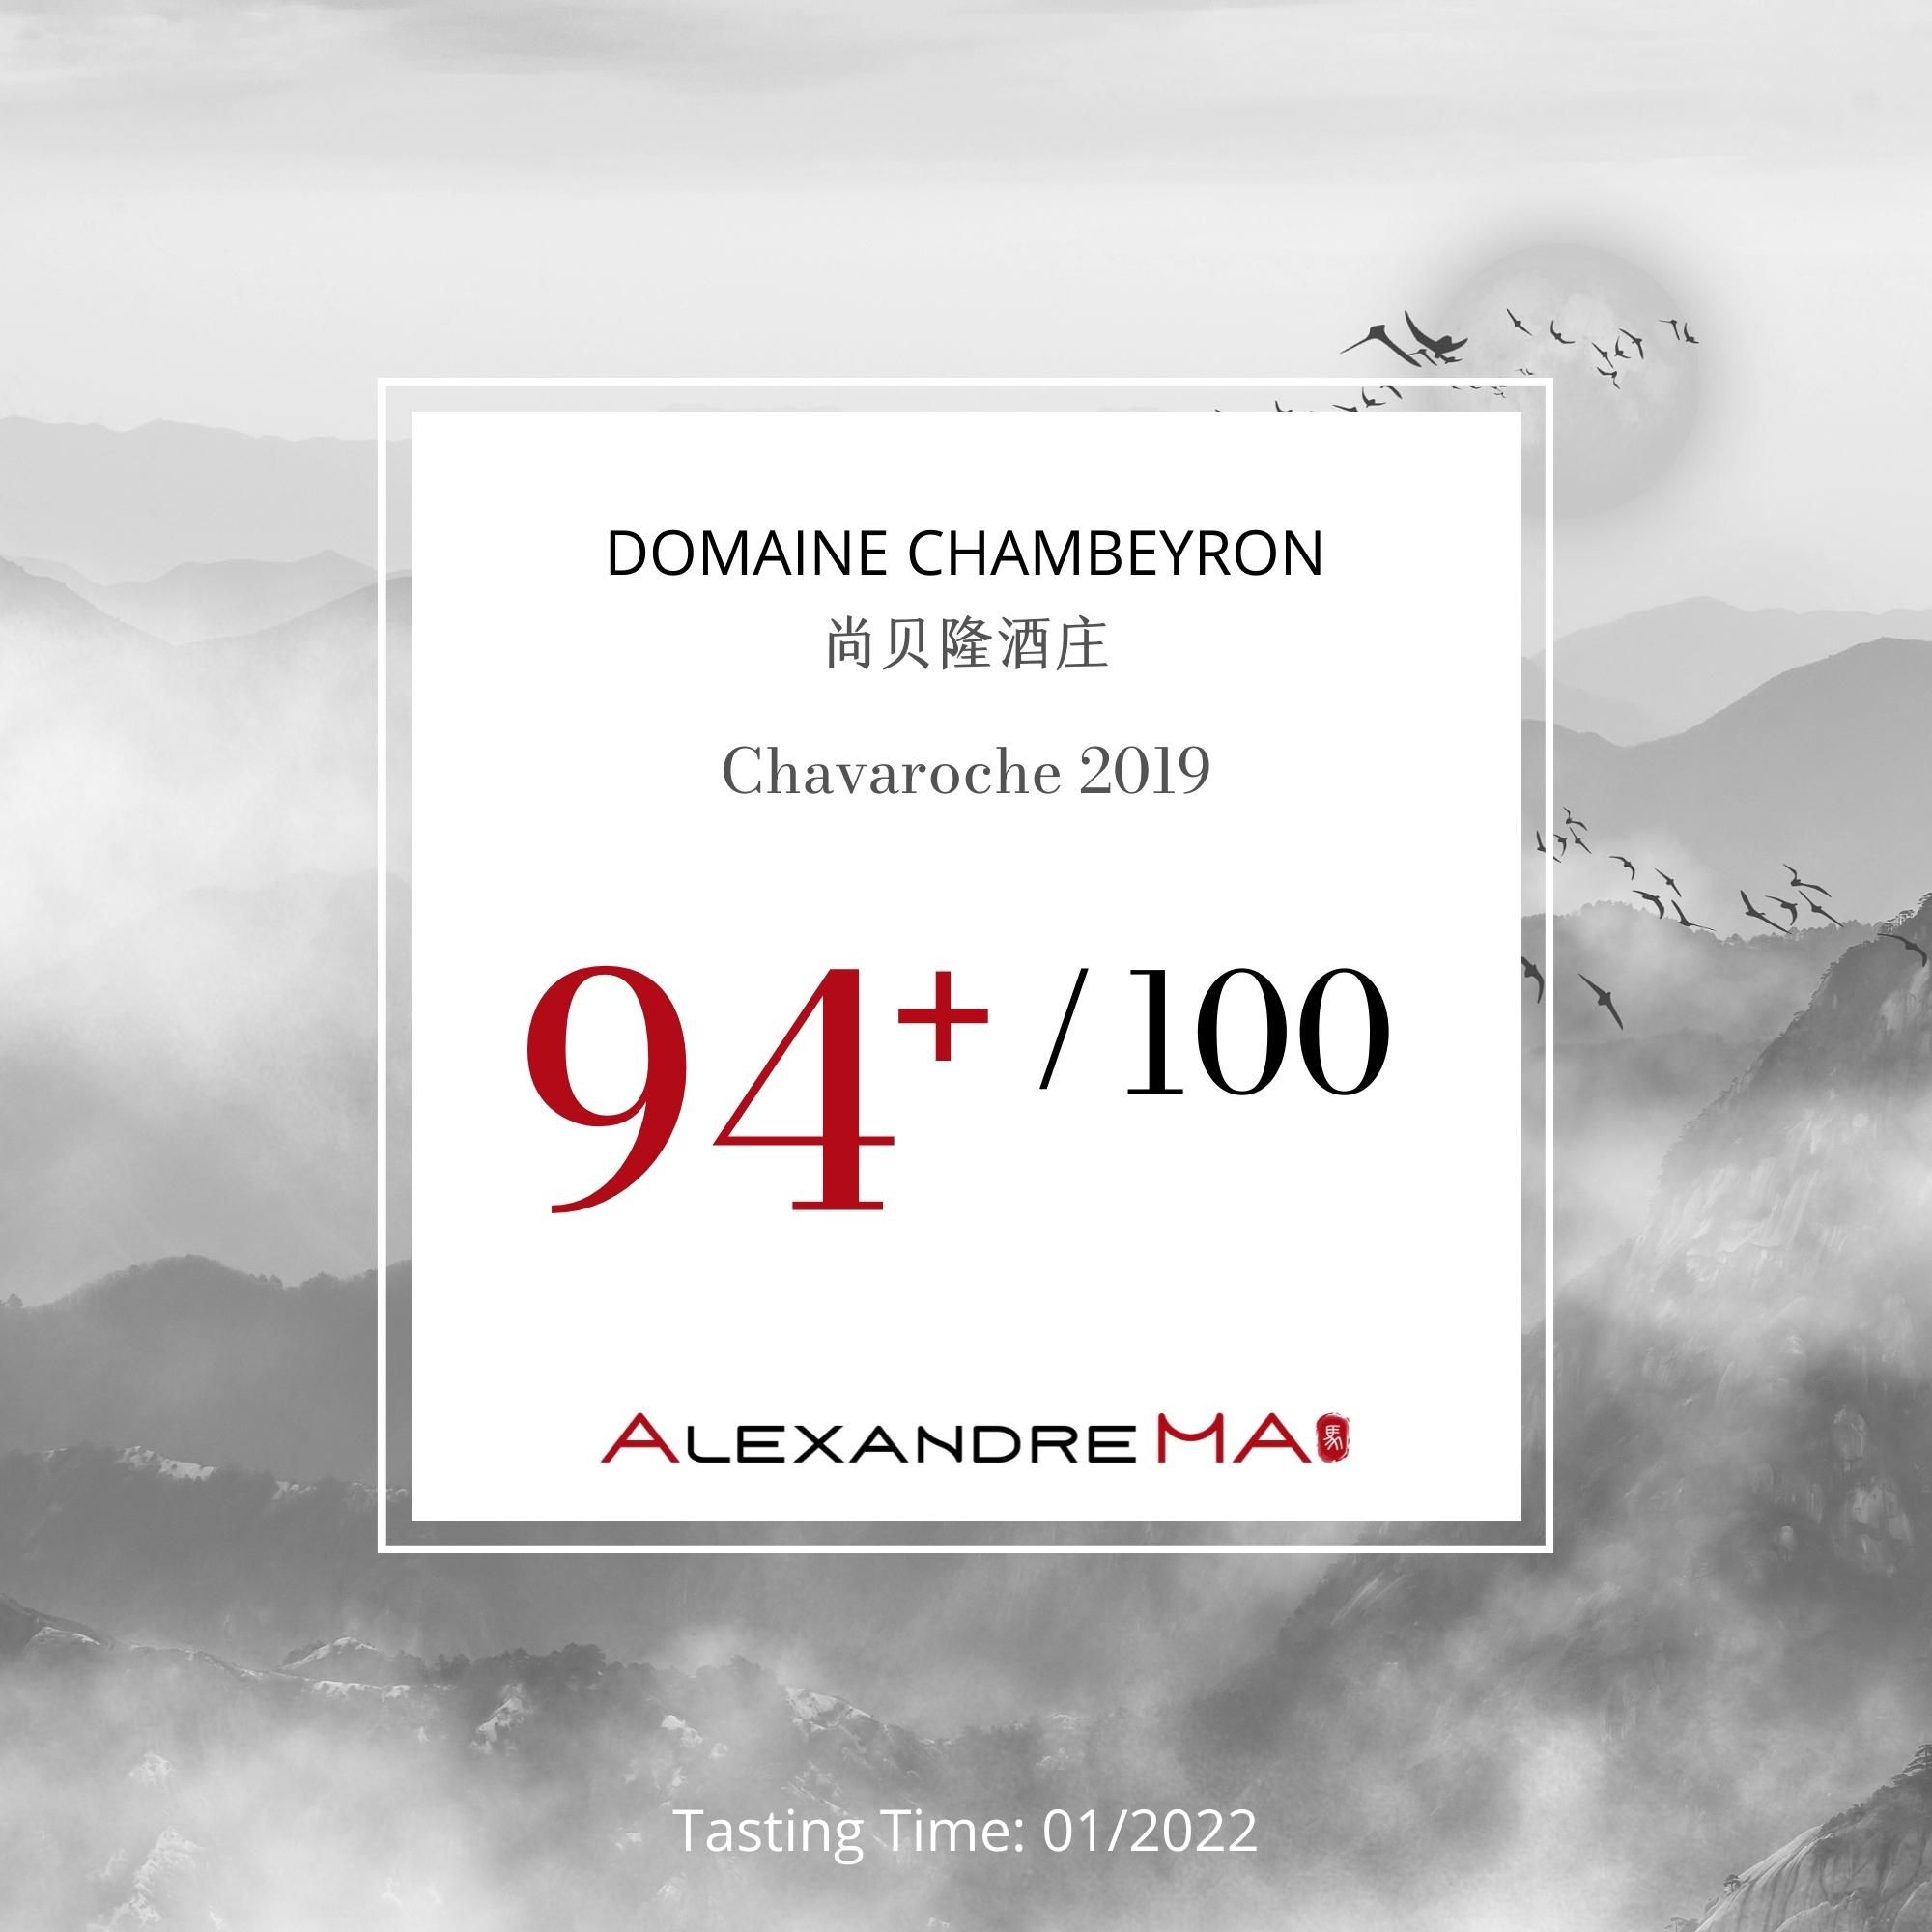 Domaine Chambeyron尚贝隆酒庄-Chavaroche 2019 - Alexandre Ma